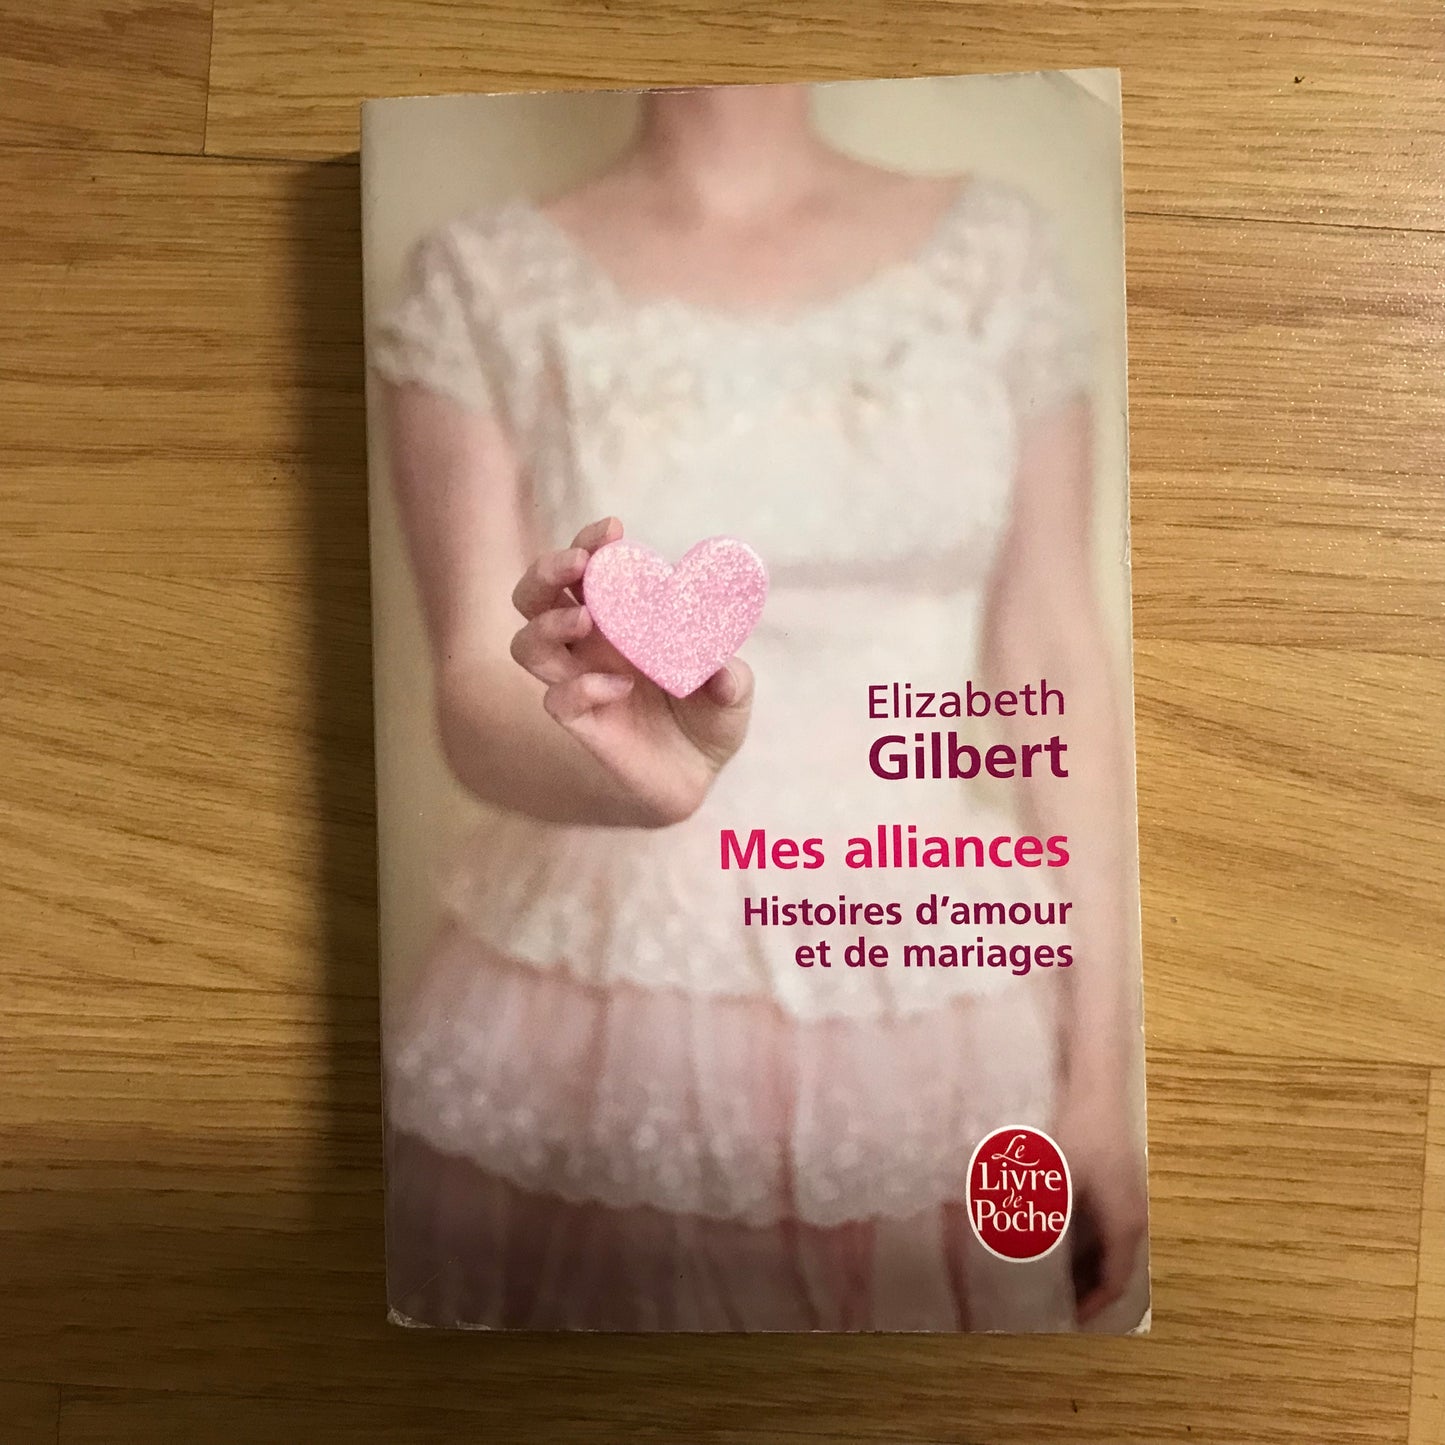 Gilbert, Elizabeth - Mes alliances